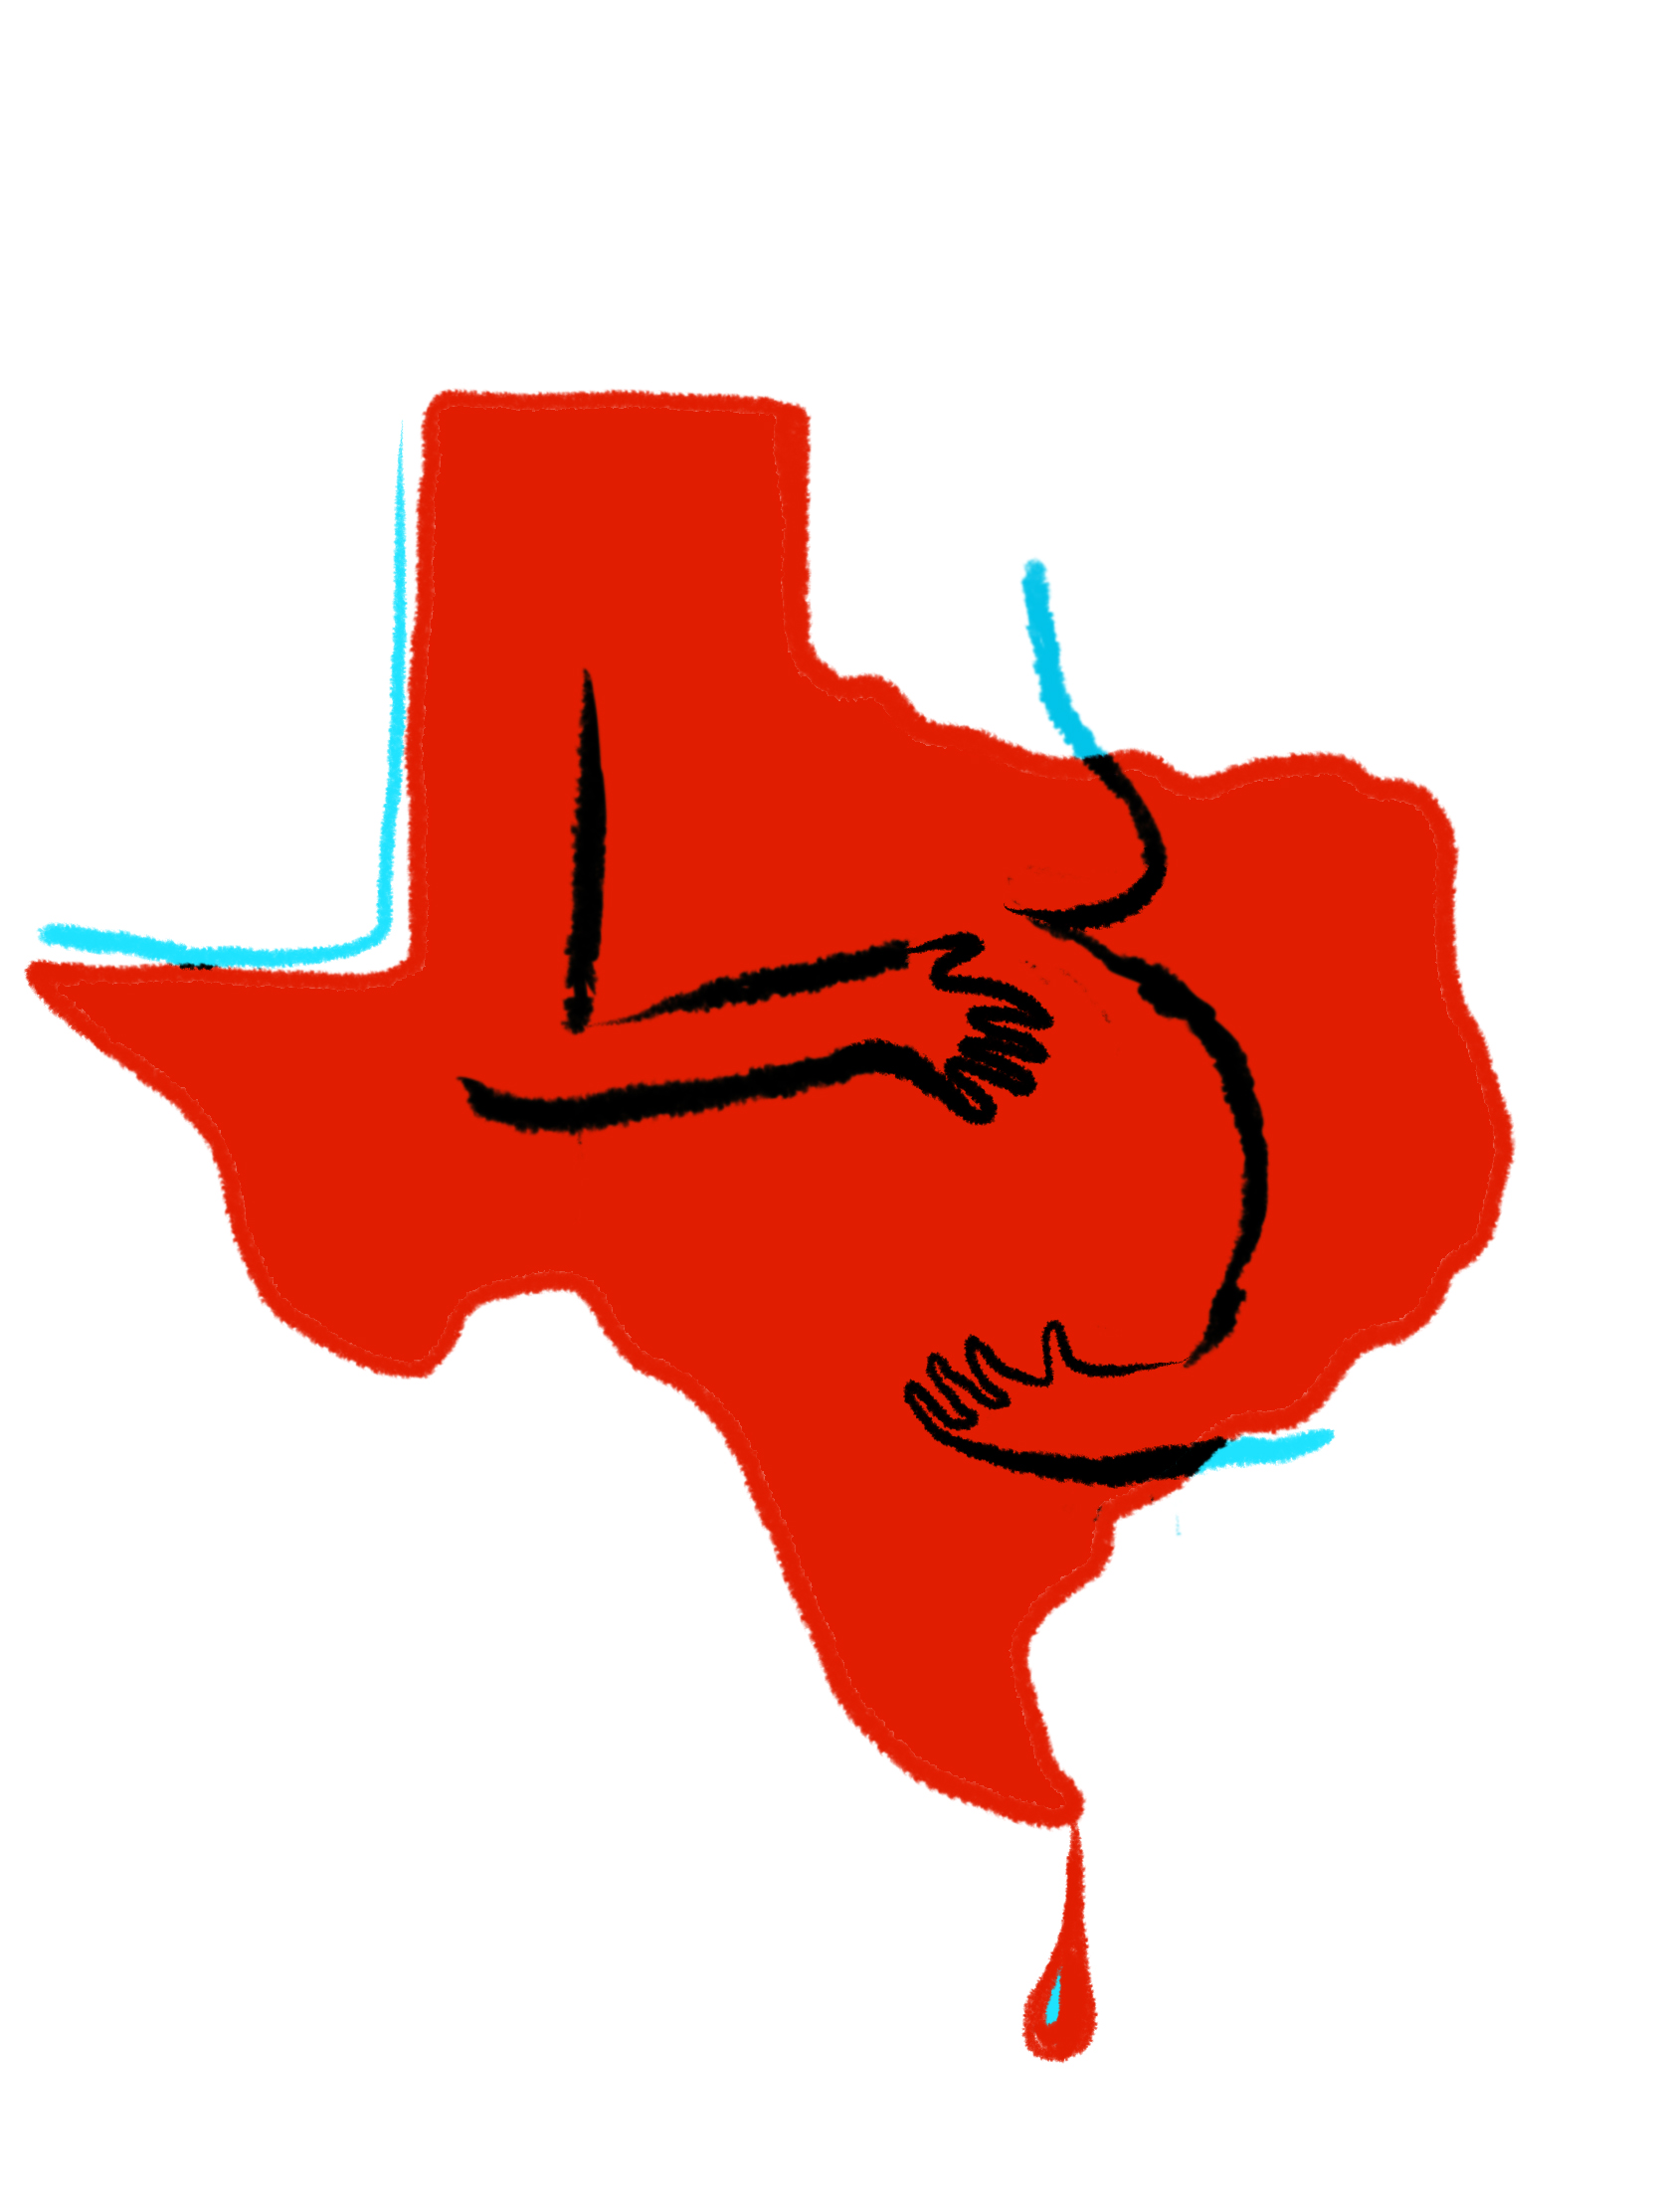 Texas's High Mother Mortality 